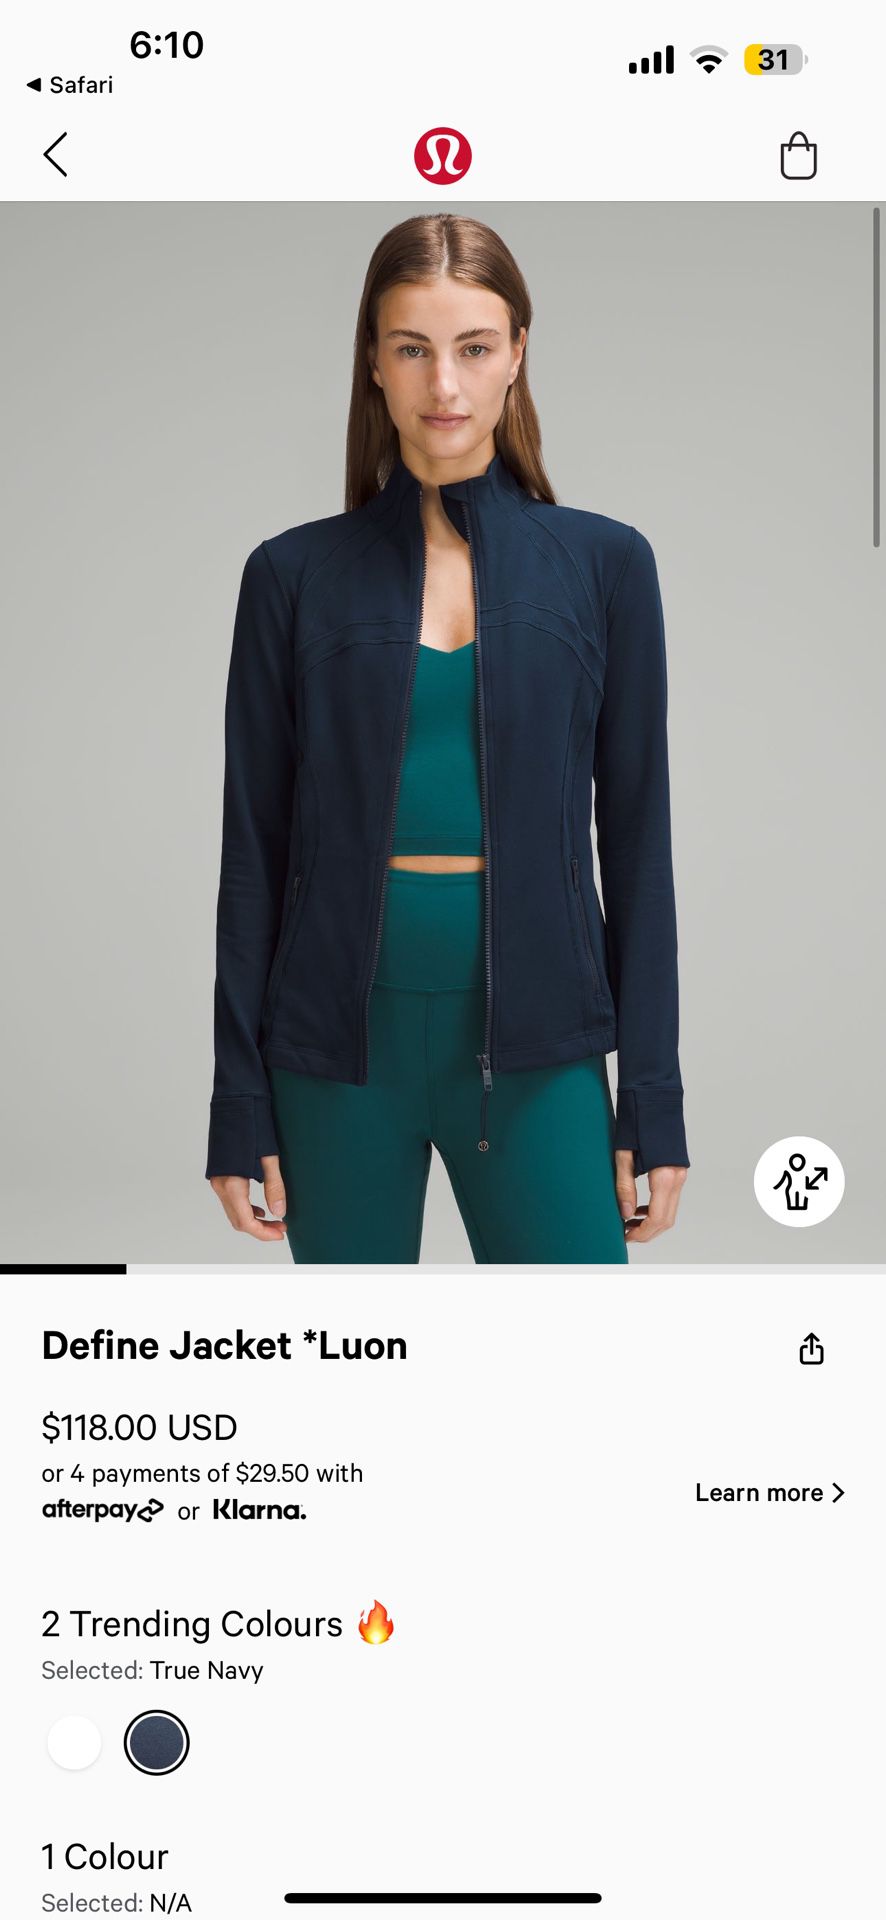 Lululemon Define Jacket Navy Blue